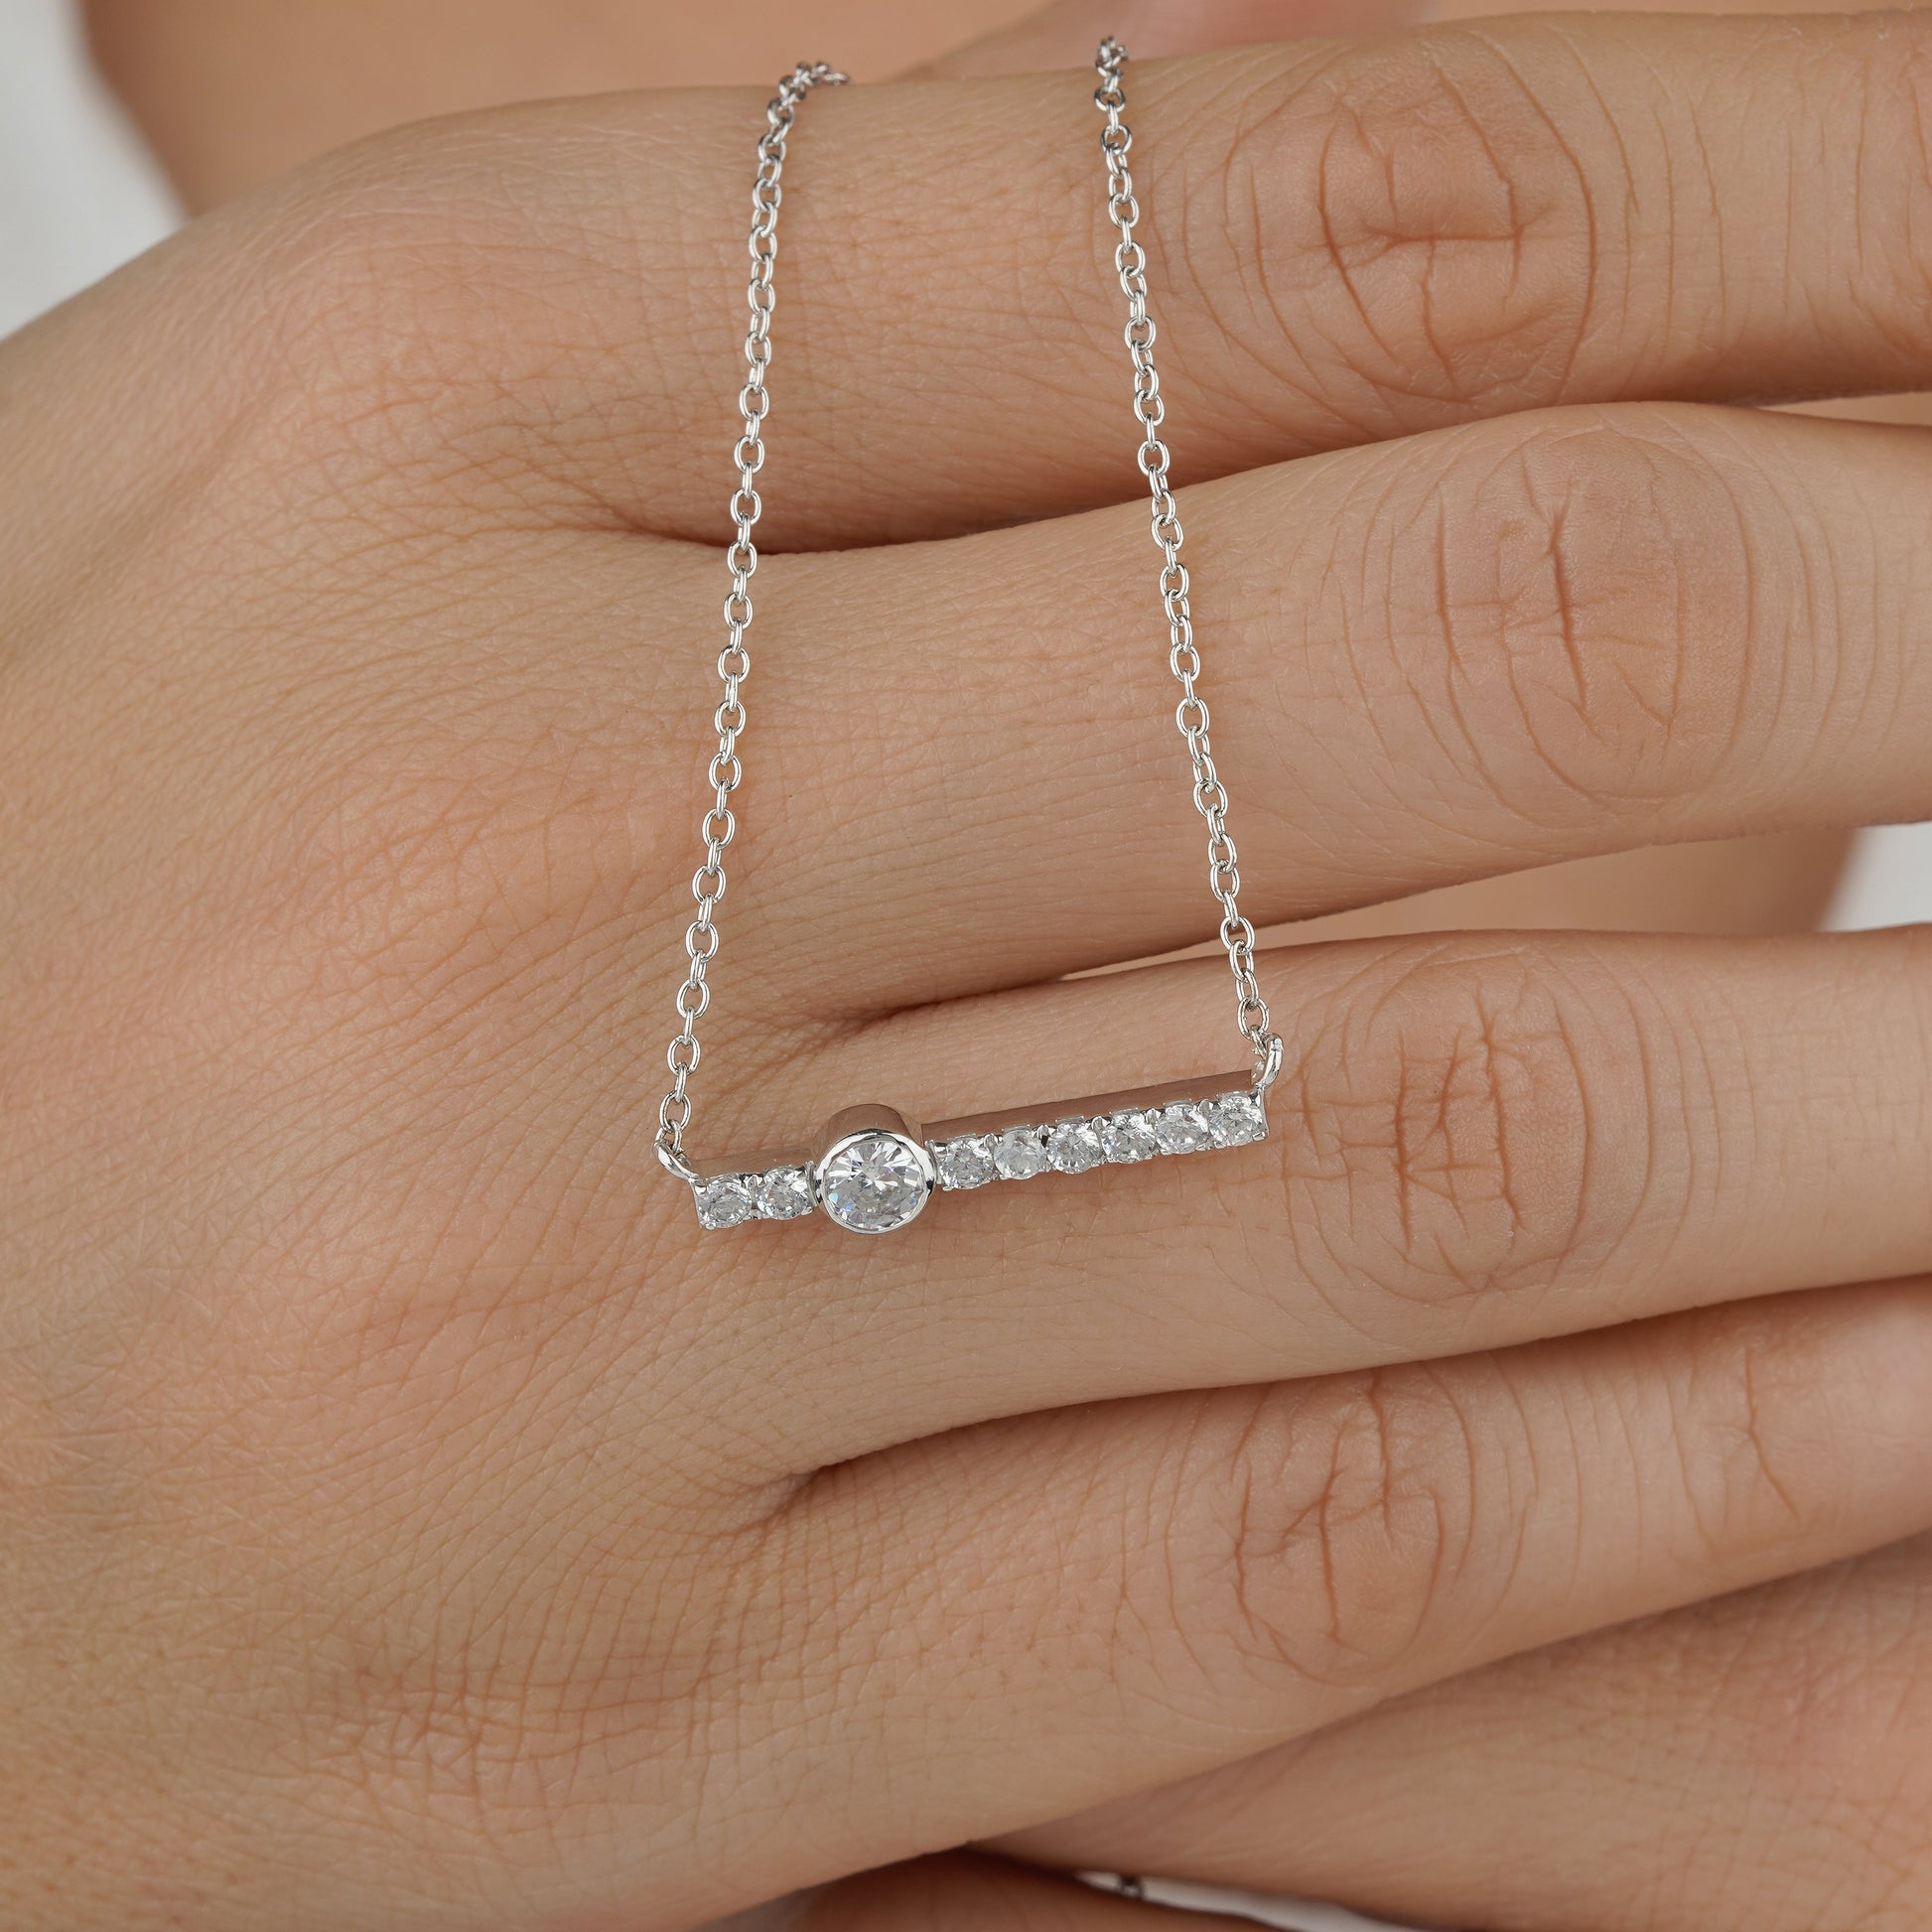 diamond bar necklace on model hand